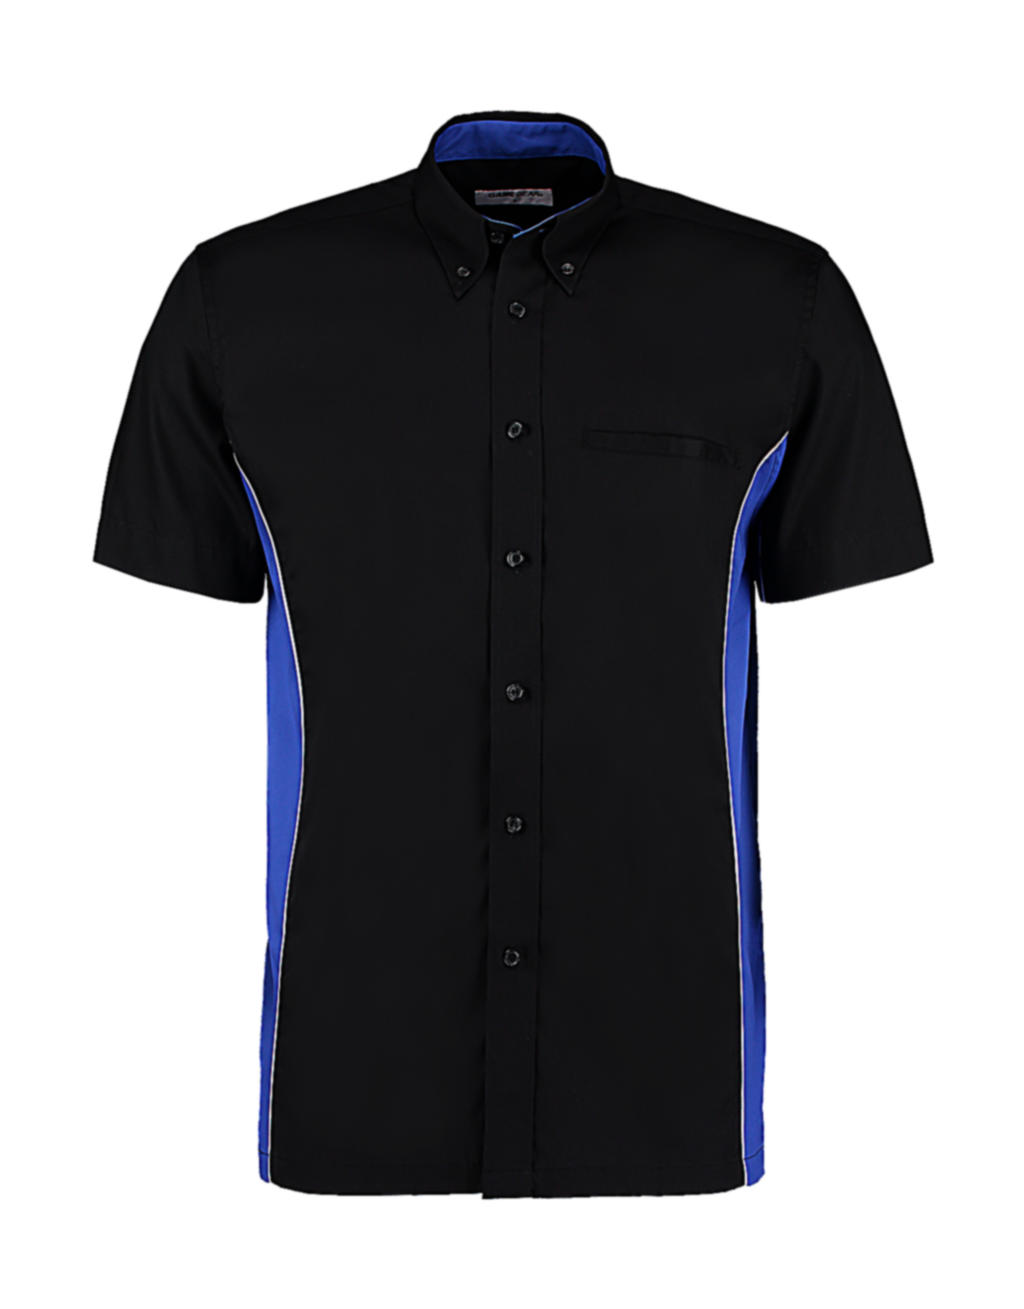  Classic Fit Sportsman Shirt SSL in Farbe Black/Royal/White